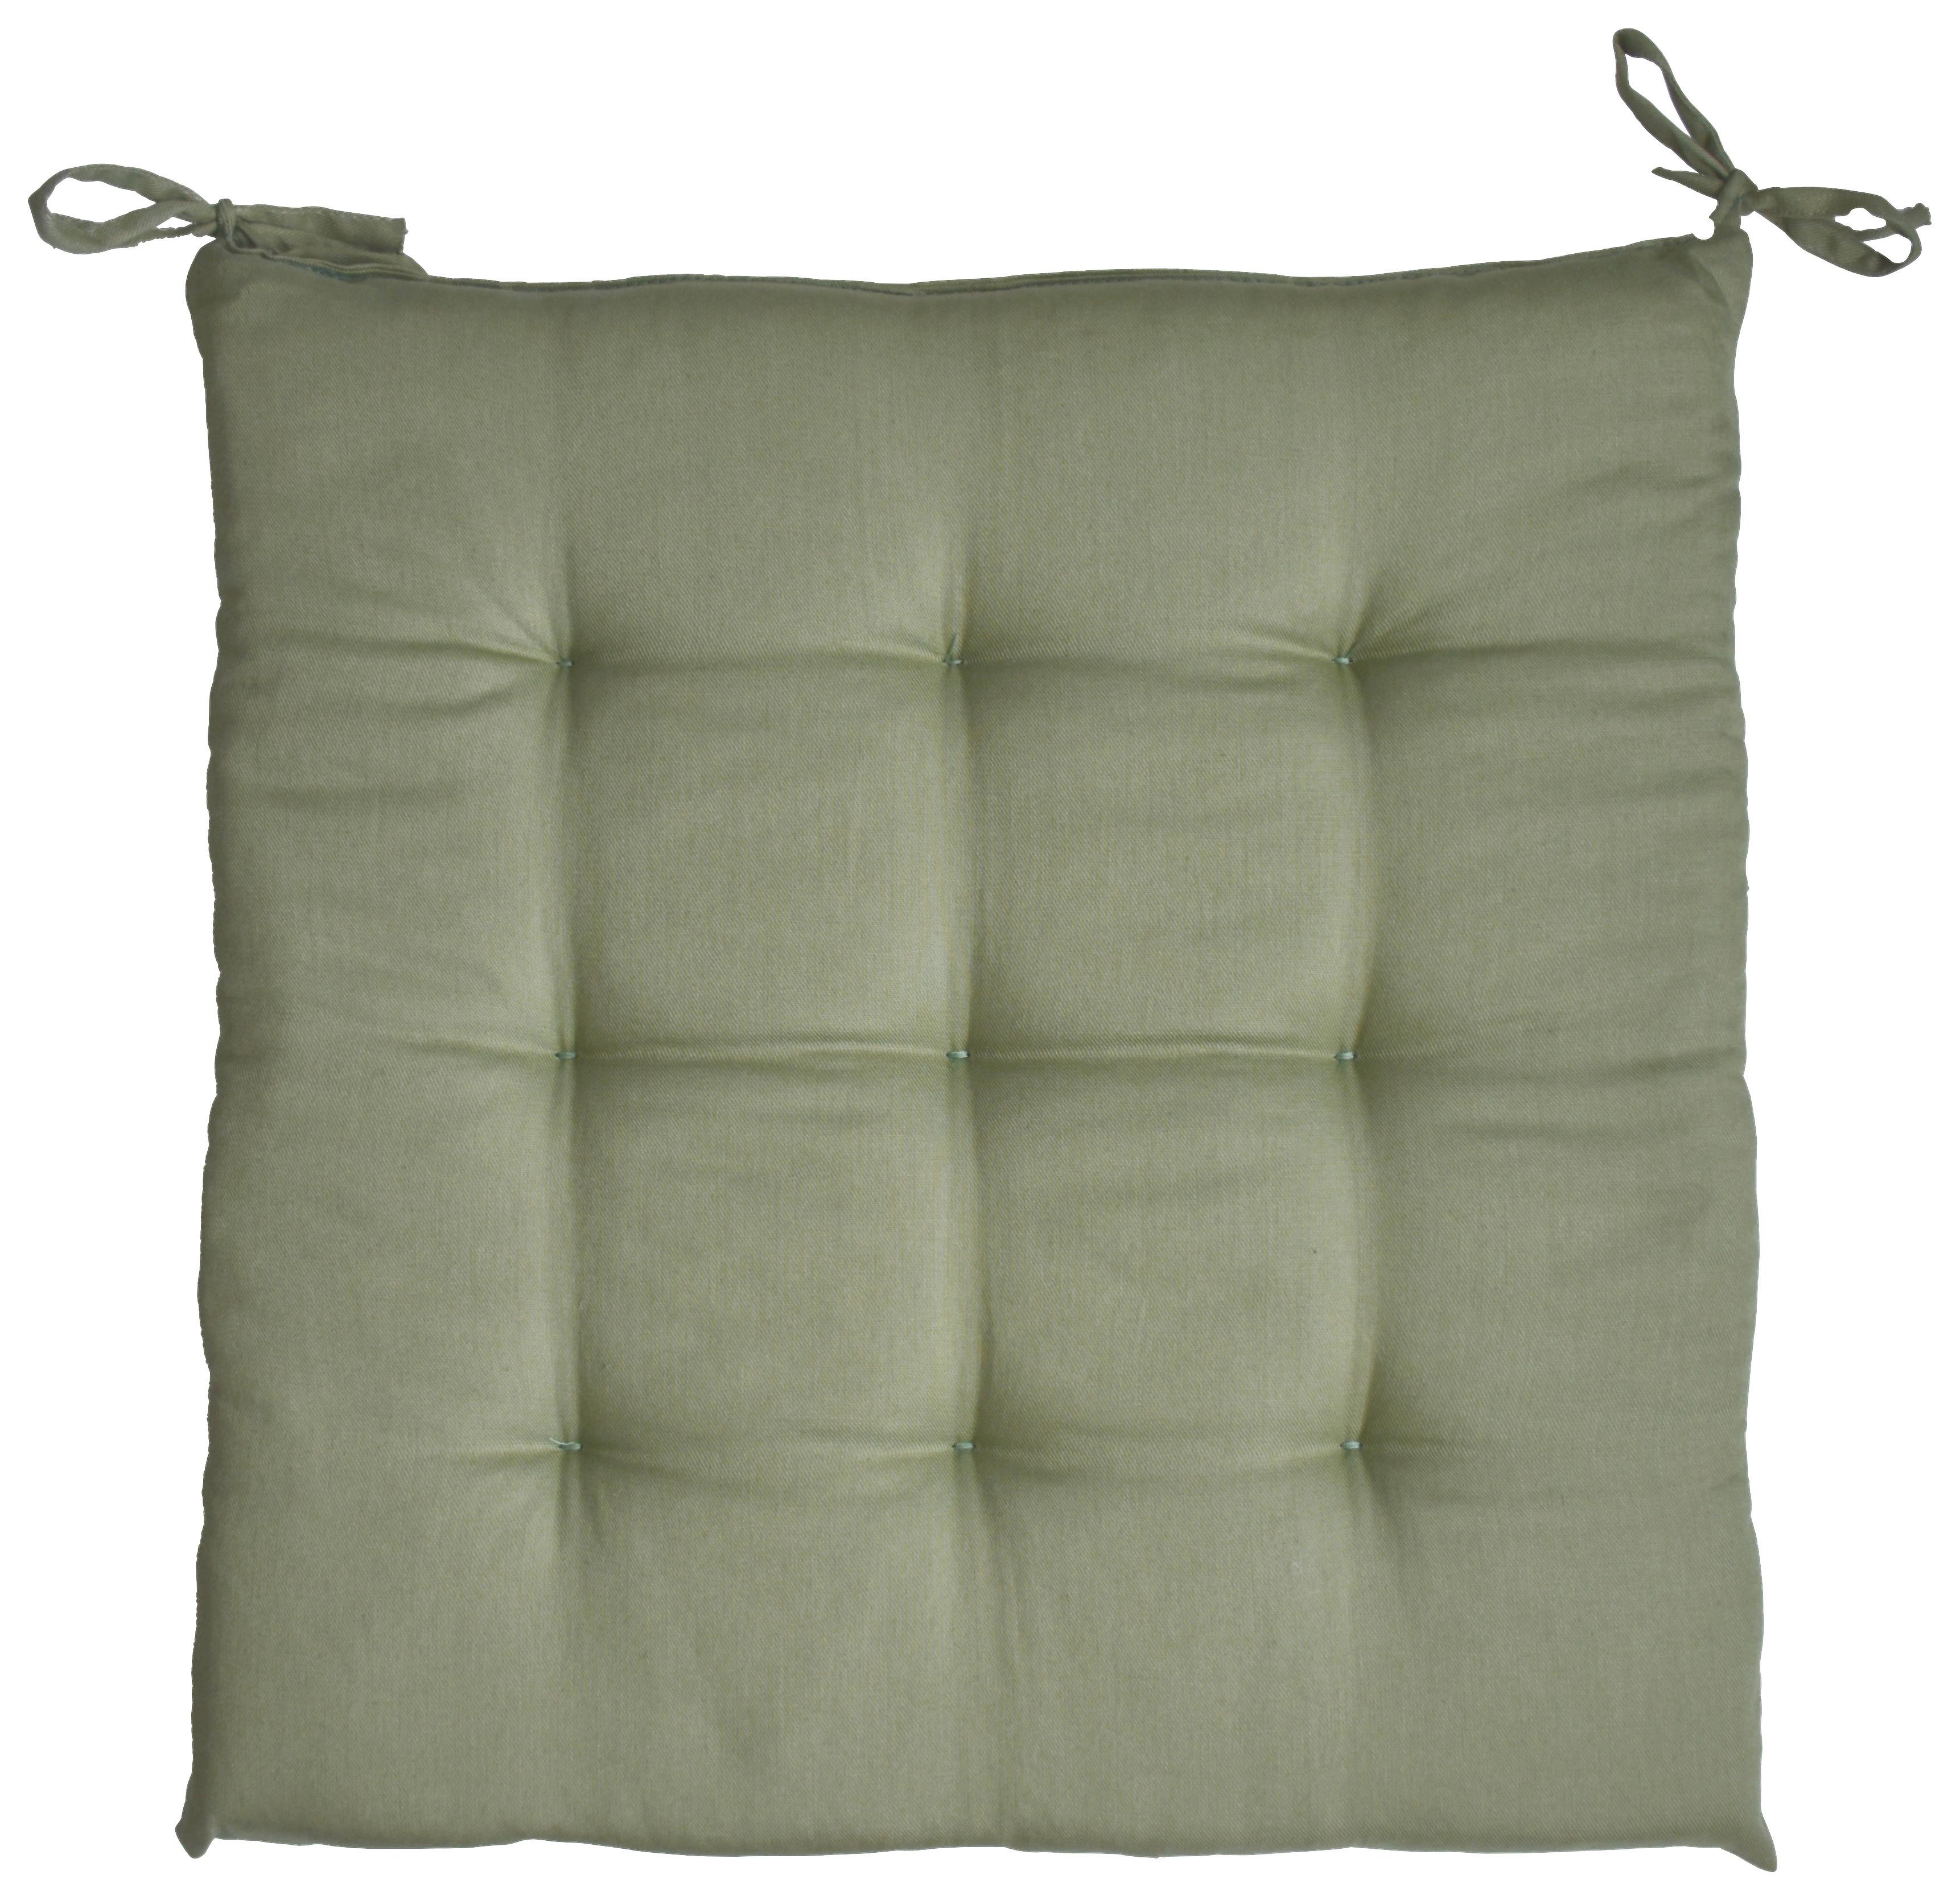 Sedežna Blazina Lola -Based- - zelena, Konvencionalno (40/40/4cm) - Based